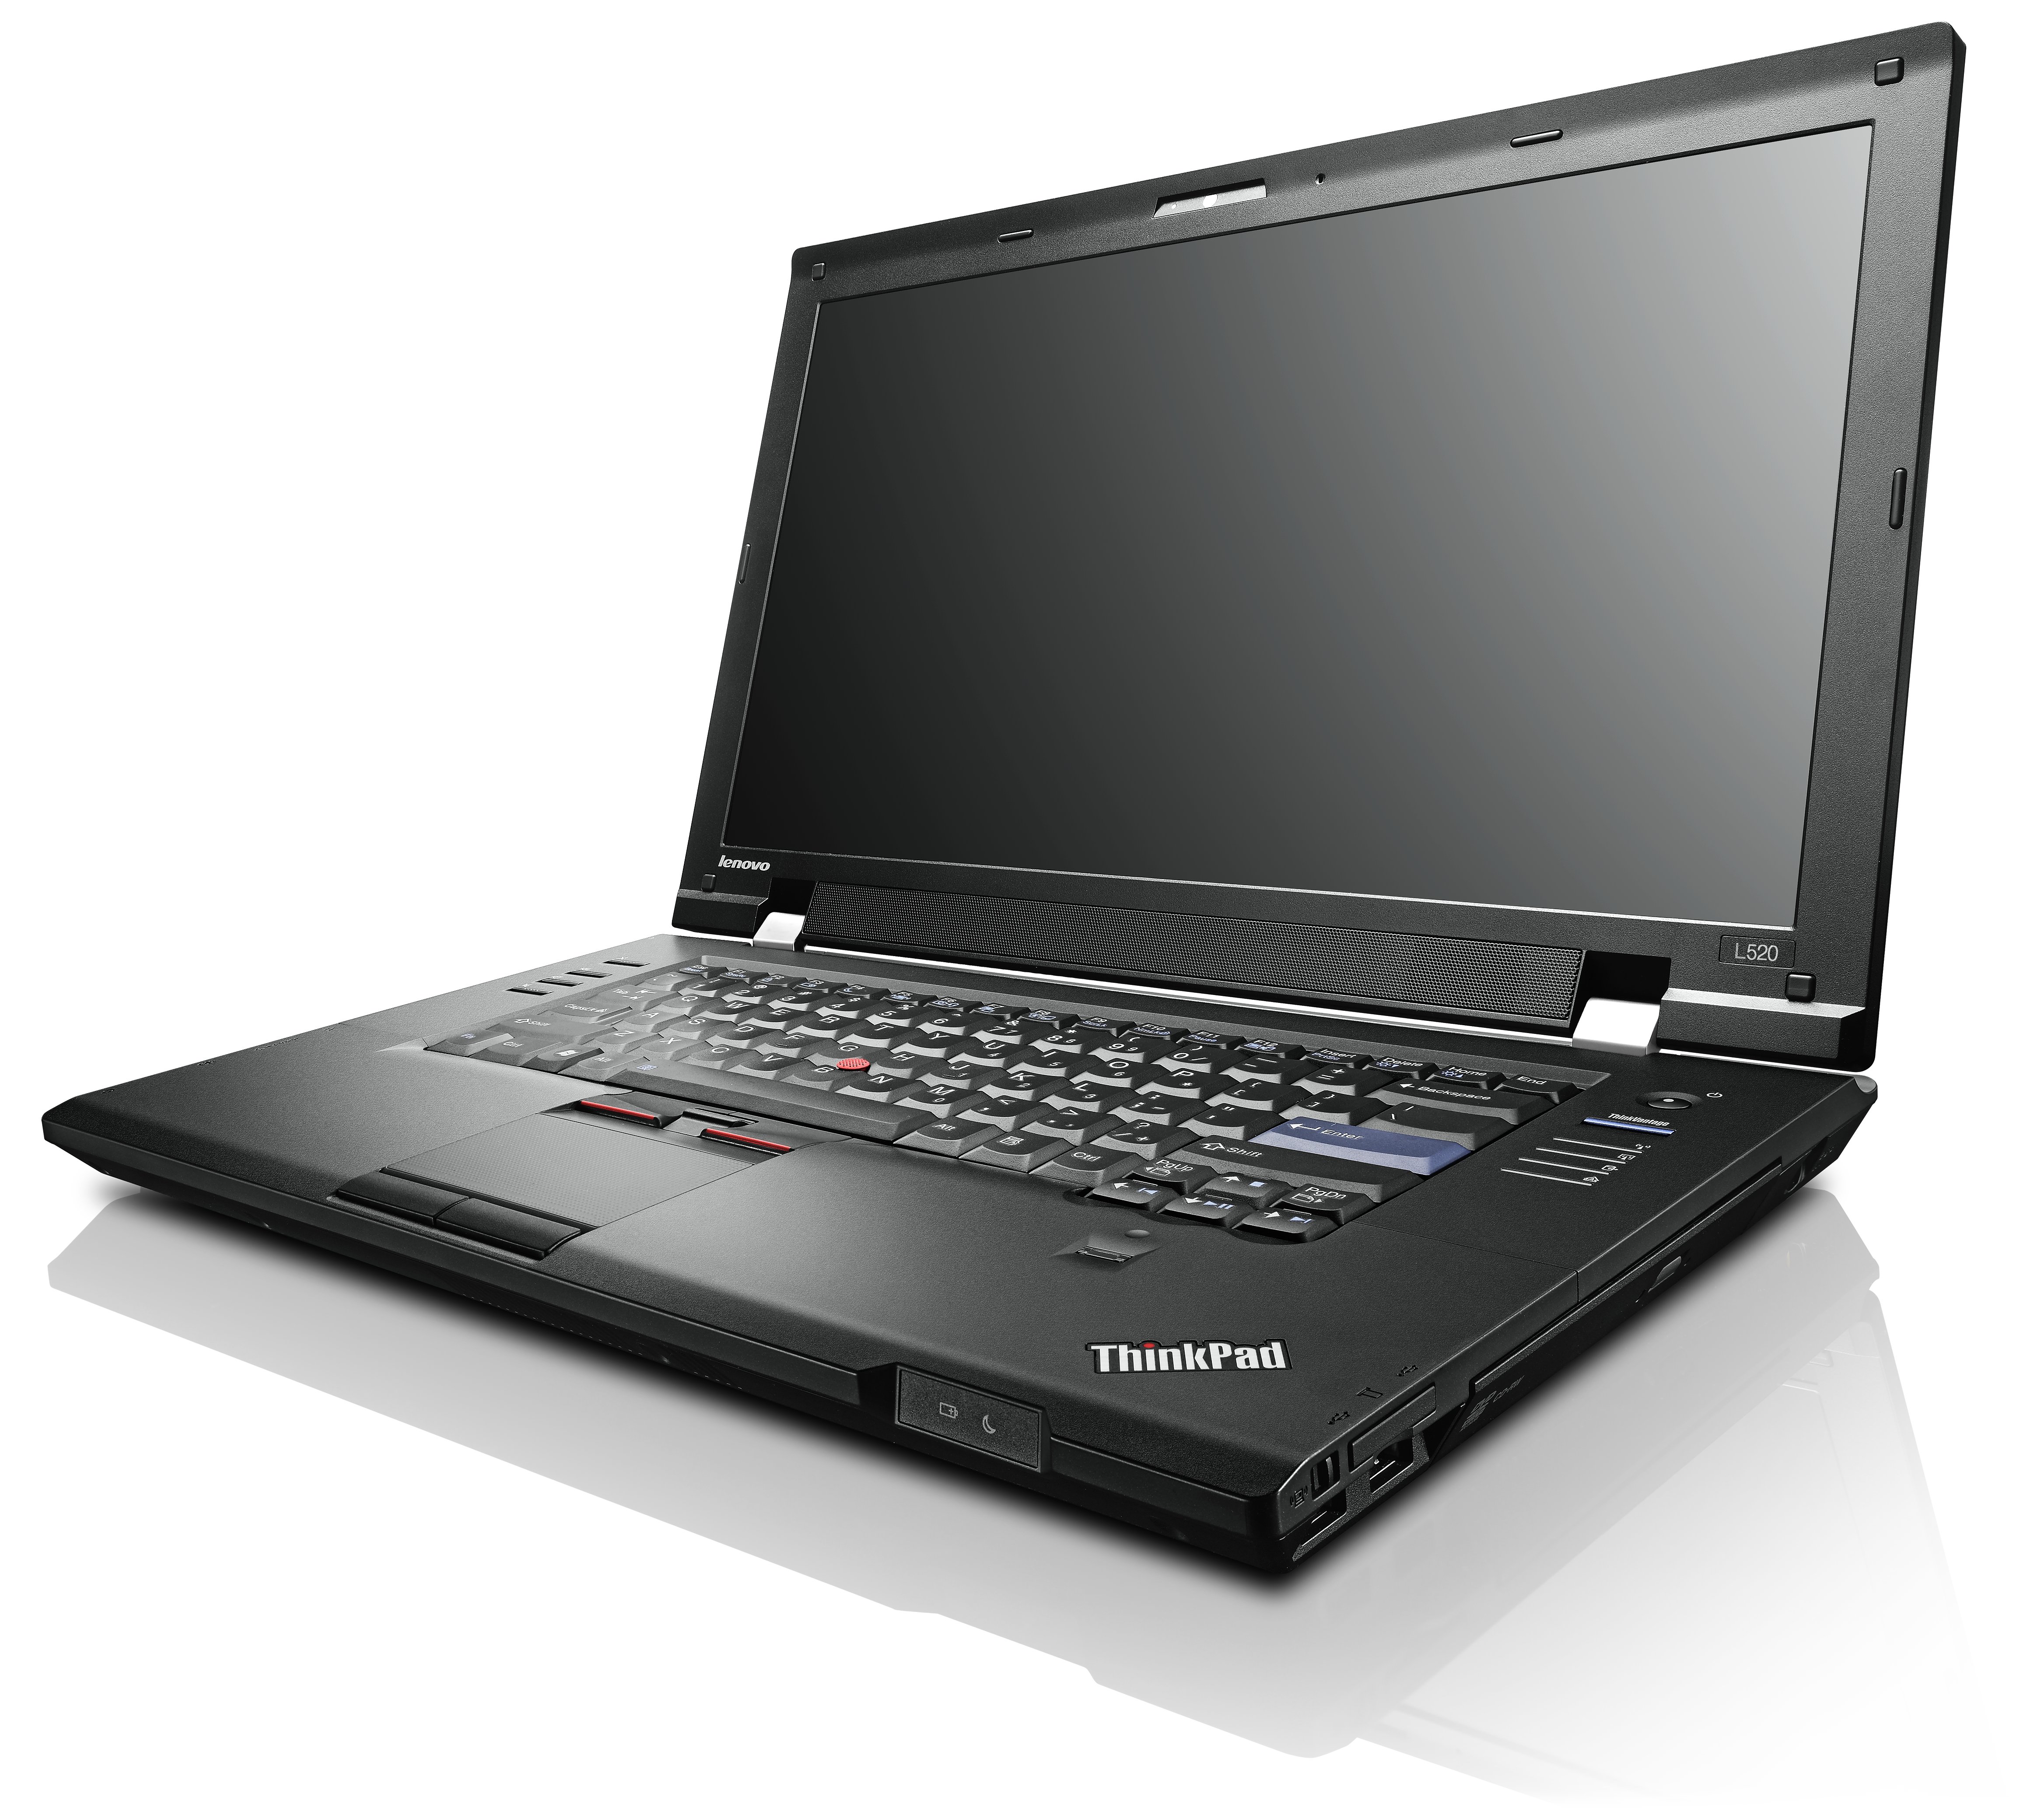 Lenovo ThinkPad L520 Details, Specs and Photos